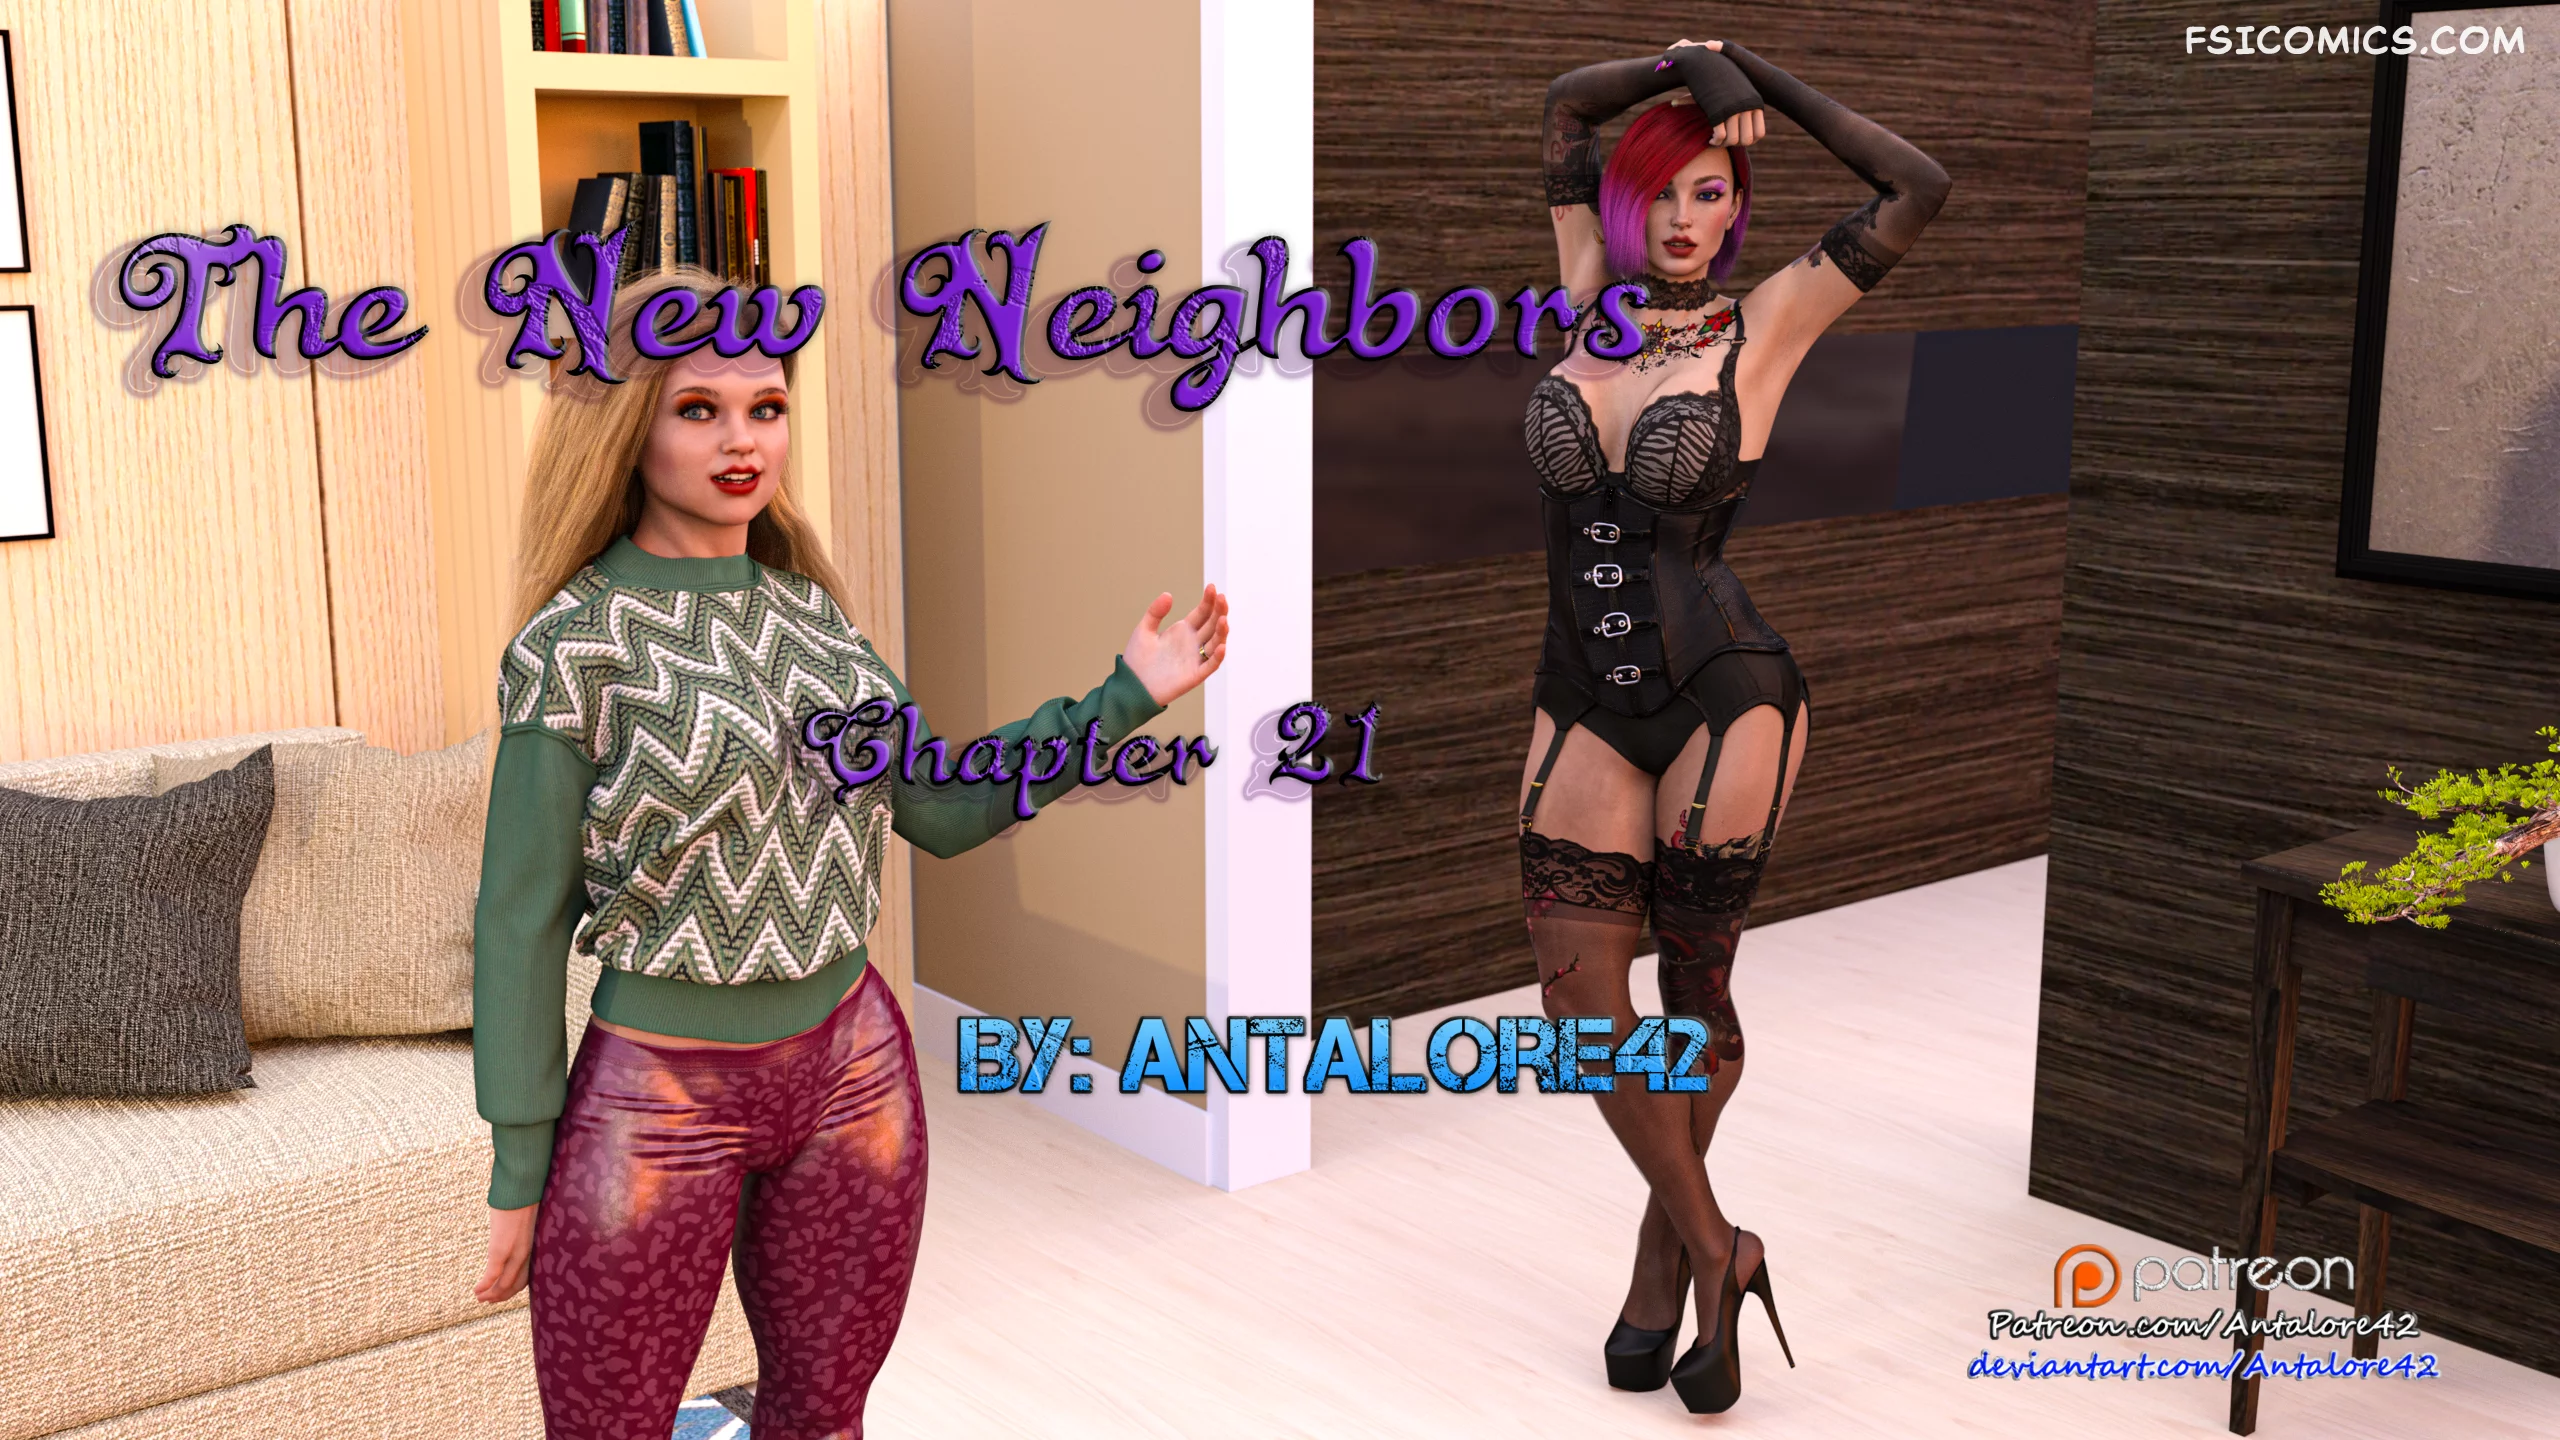 The New Neighbors Chapter 21 – Antalore42 - 93 - FSIComics